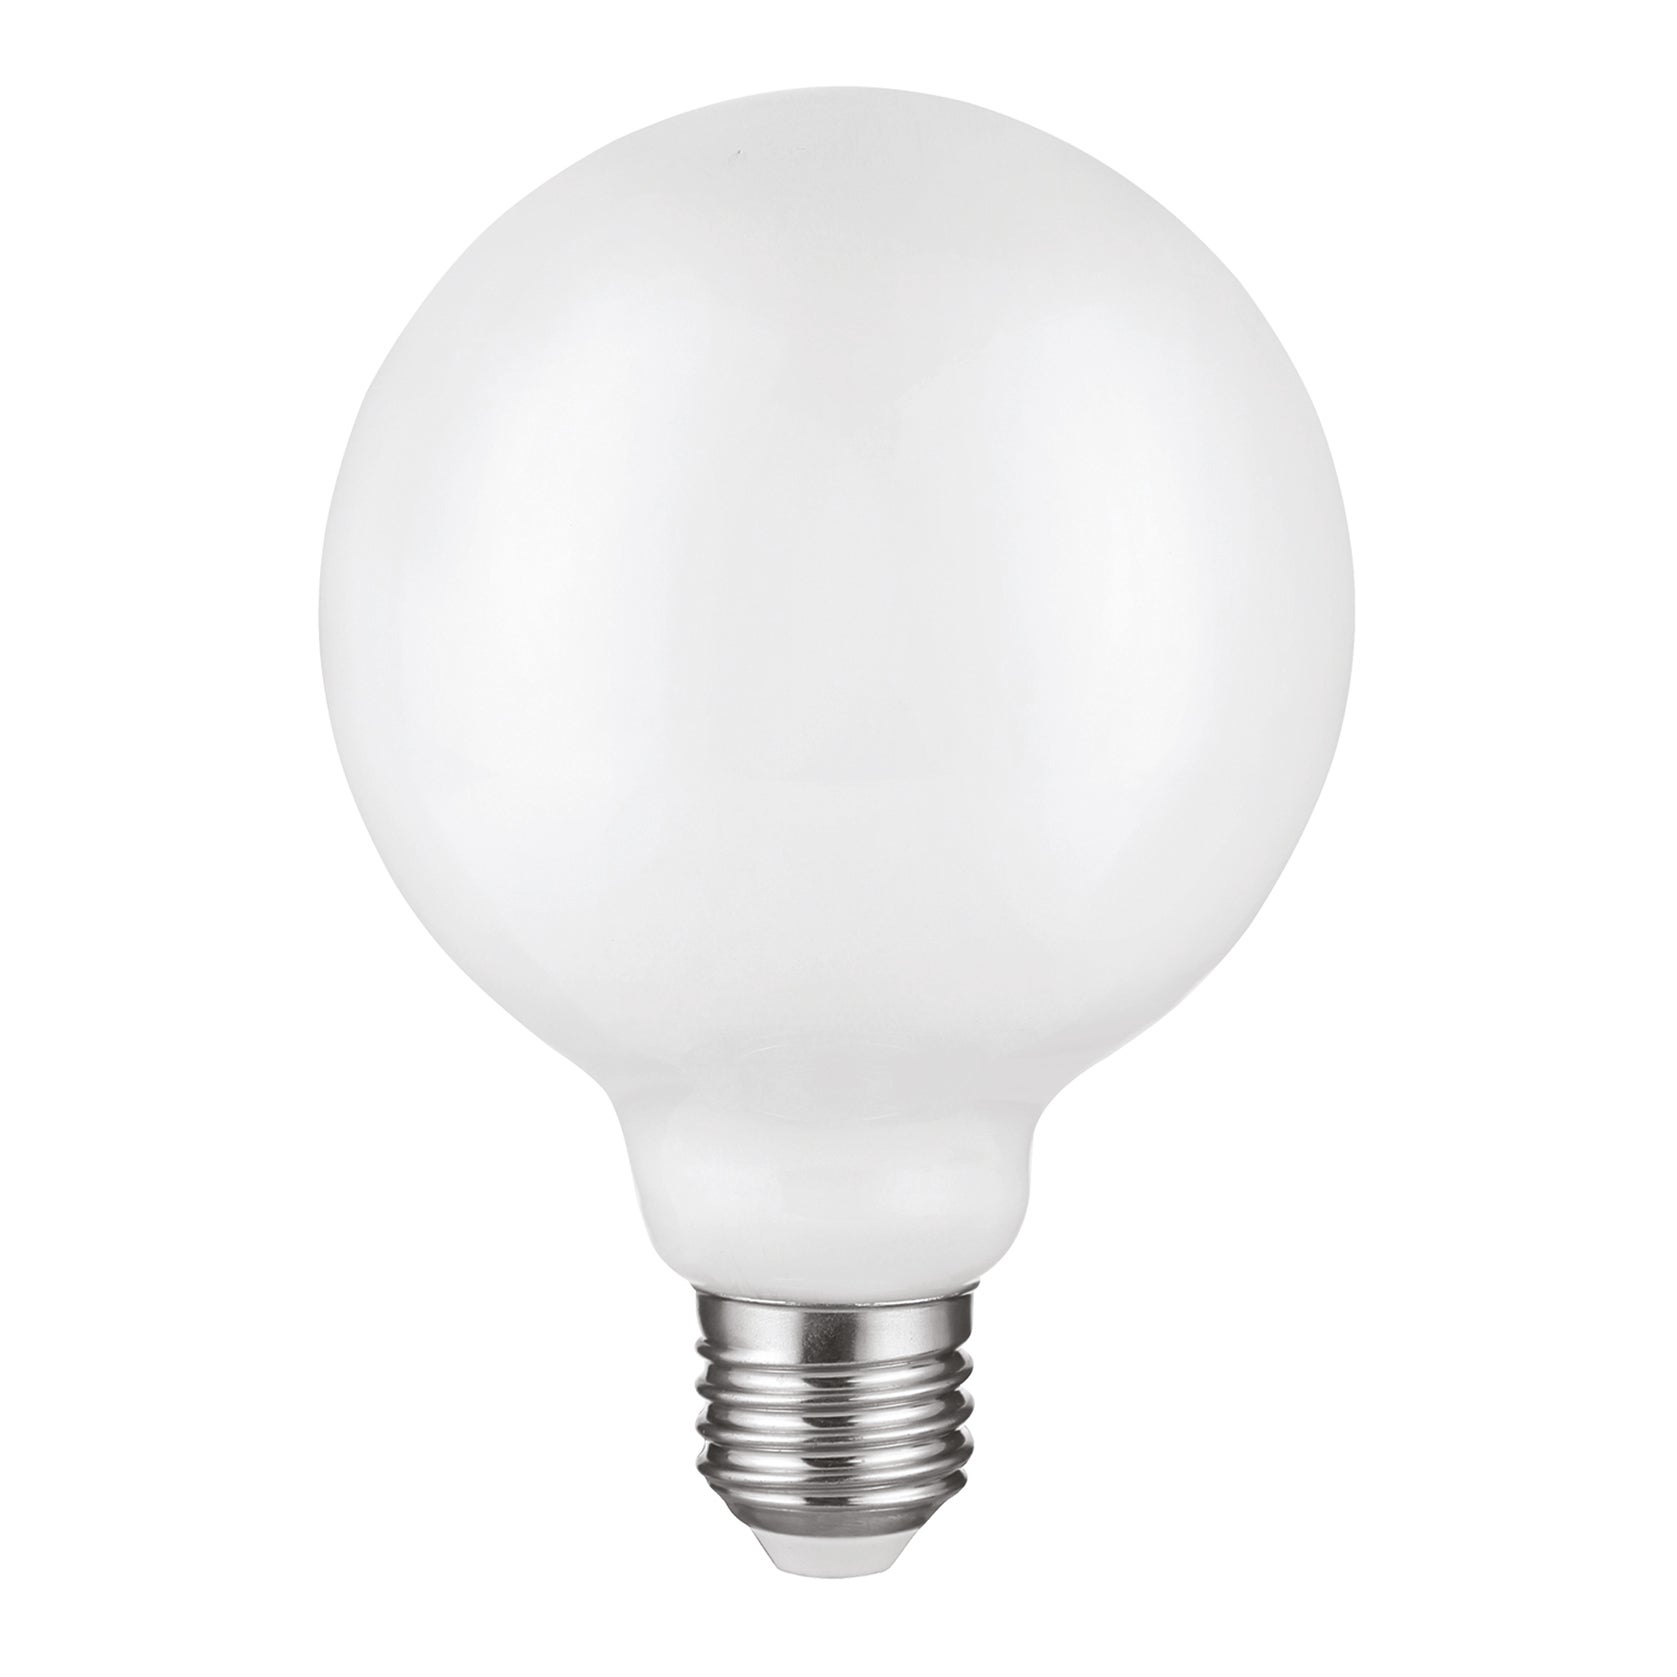 3x LED Globo Lampadina 15W B22 Ricambio Per 130w Bianco Freddo Energia Risparmio 